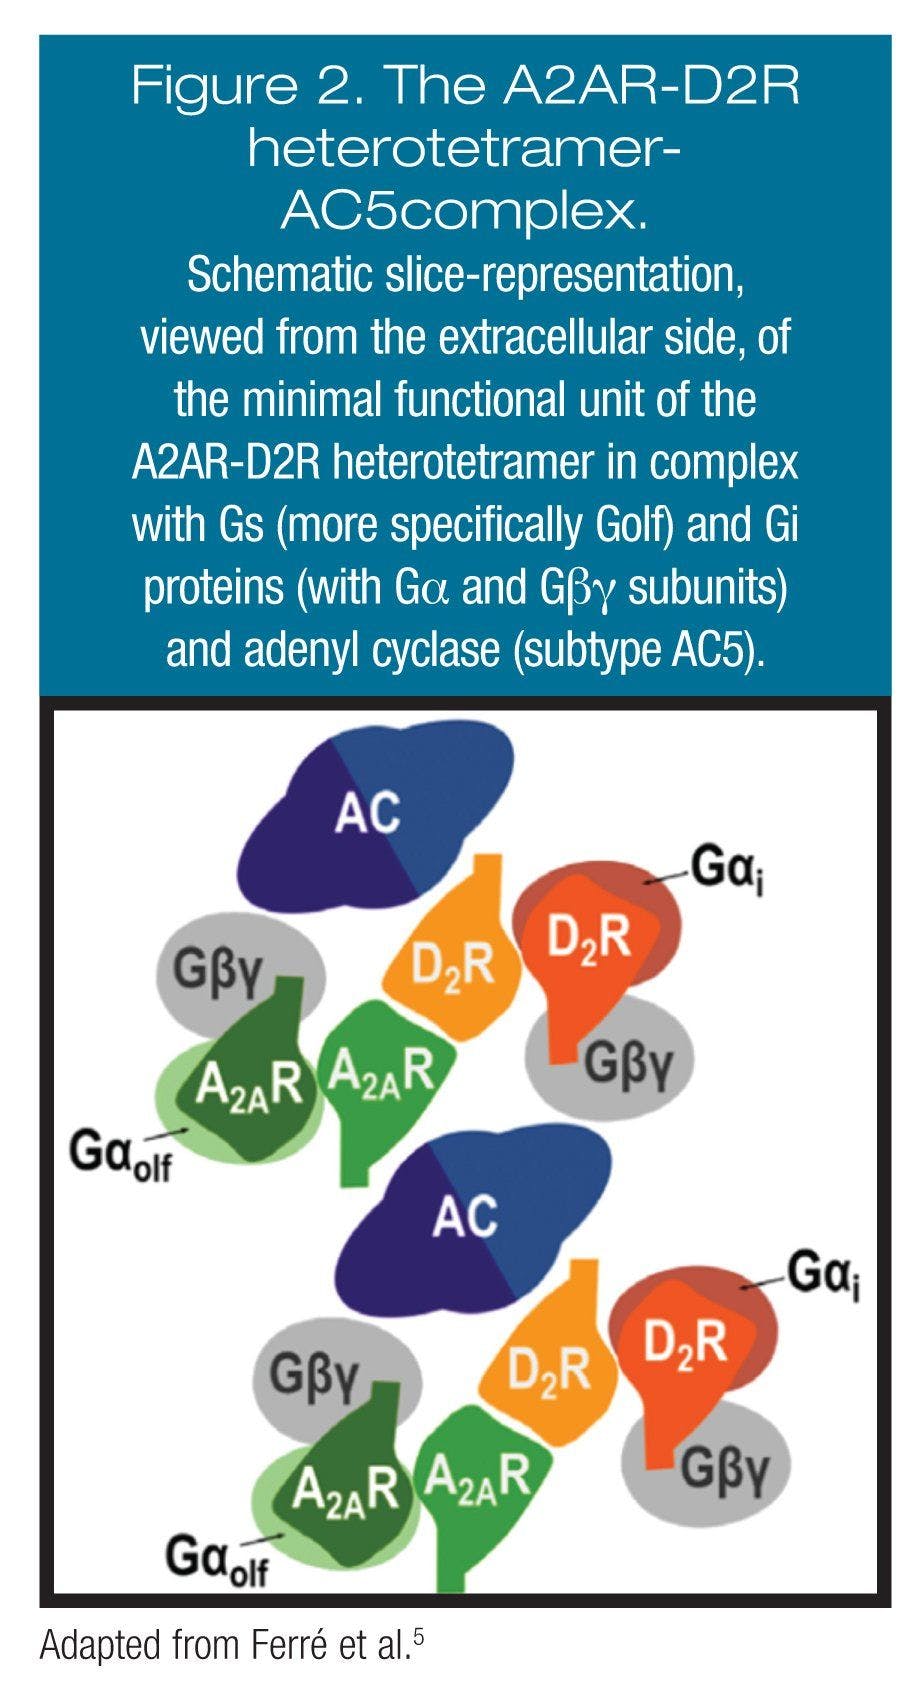 The A2AR-D2R heterotetramer- AC5complex. Adapted from Ferré et al.[5]